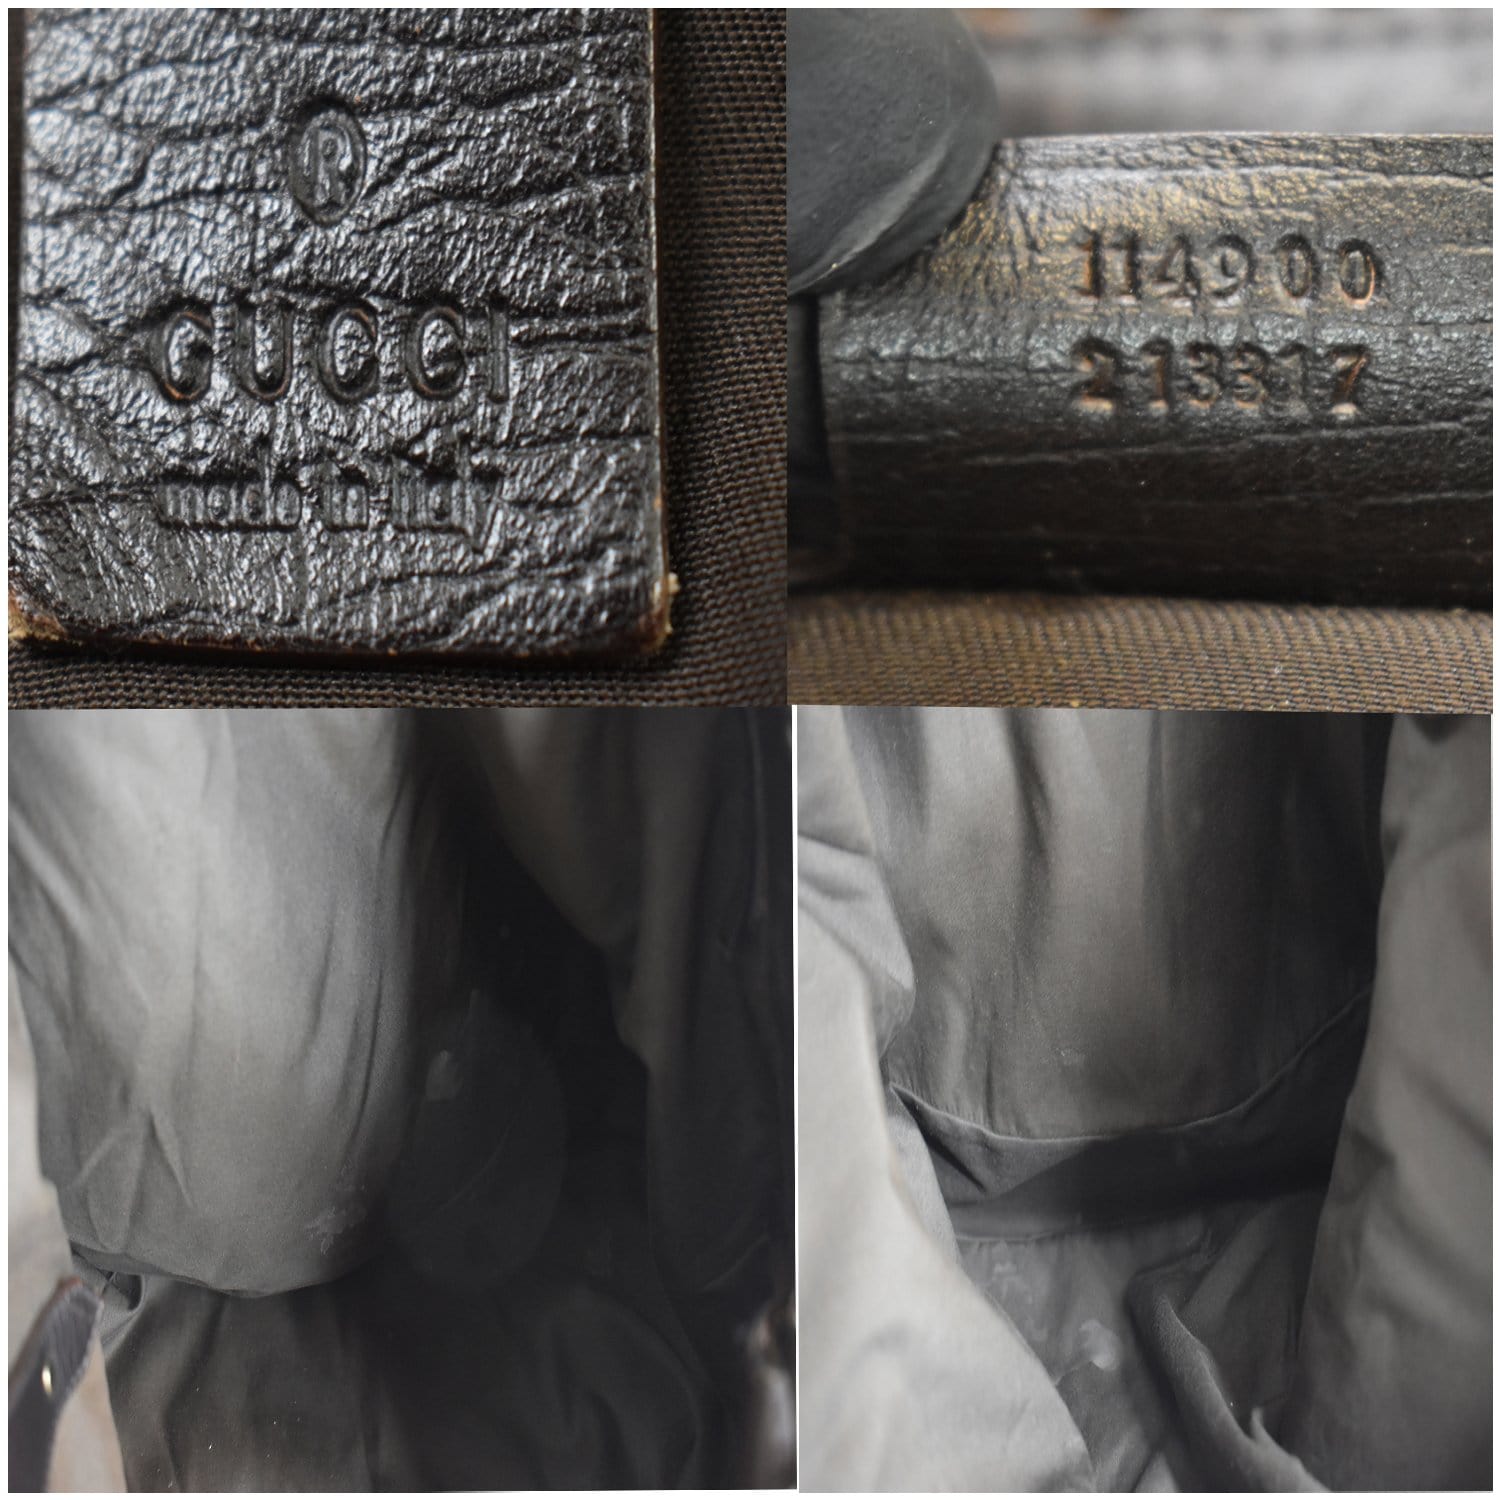 Gucci Beige/Ebony GG Canvas Large Horsebit Hobo Bag - Yoogi's Closet